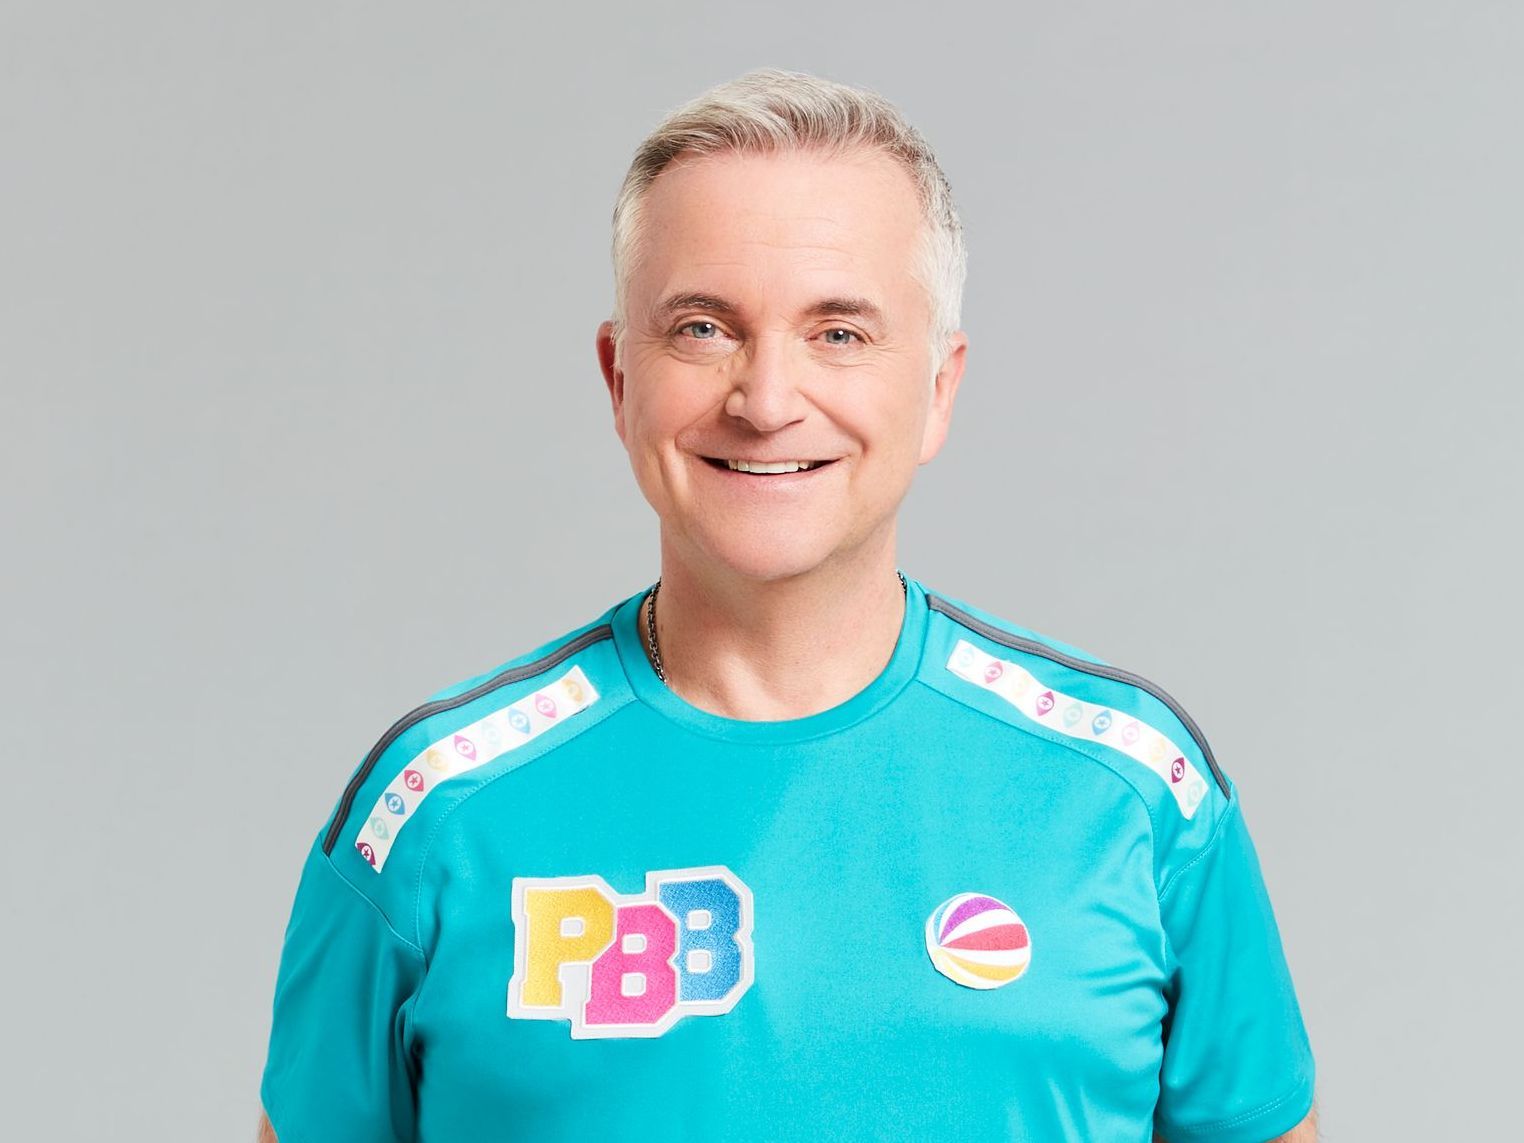 Jörg Knör ist bei "Promi Big Brother" 2022 dabei